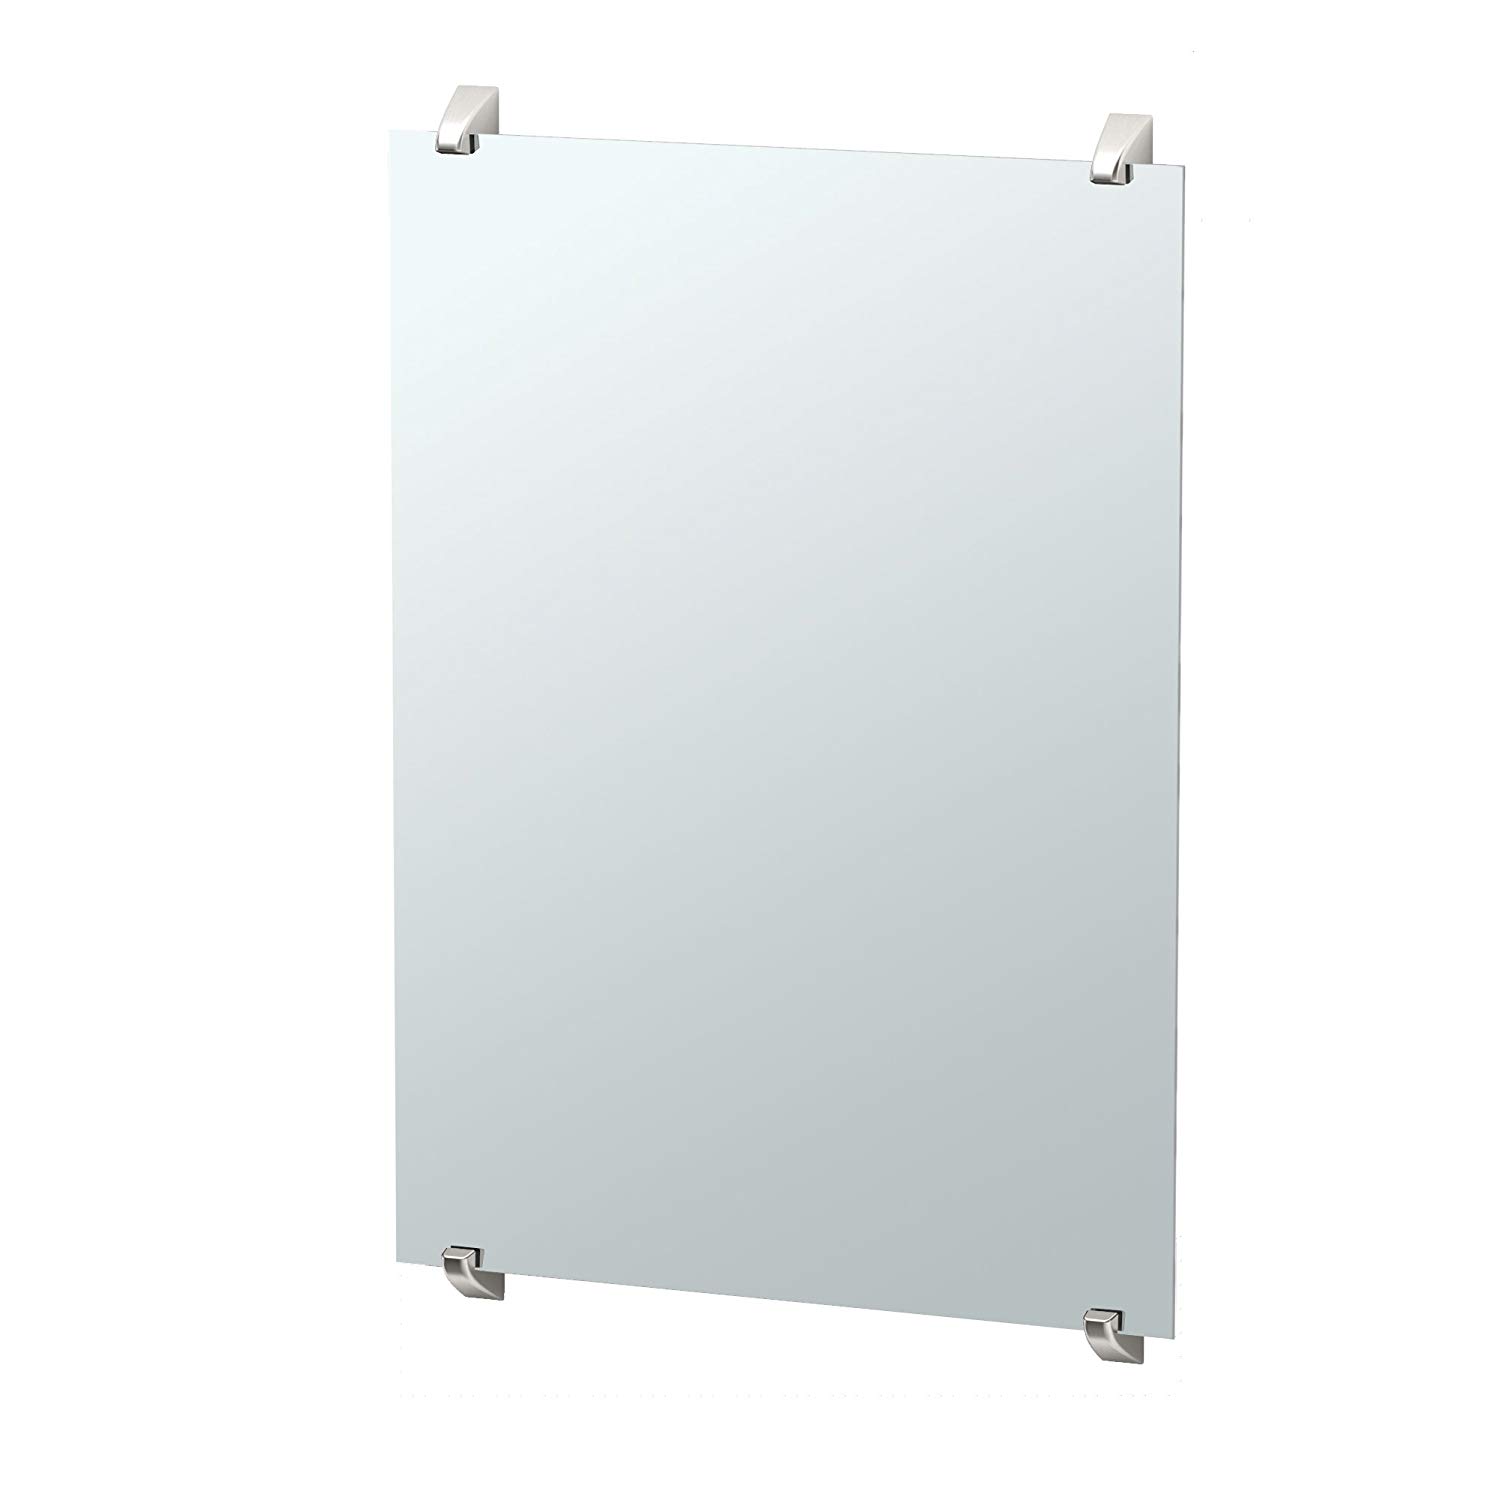 Quantra 22x30" Fixed Mount Minimalist Mirror in Satin Nickel